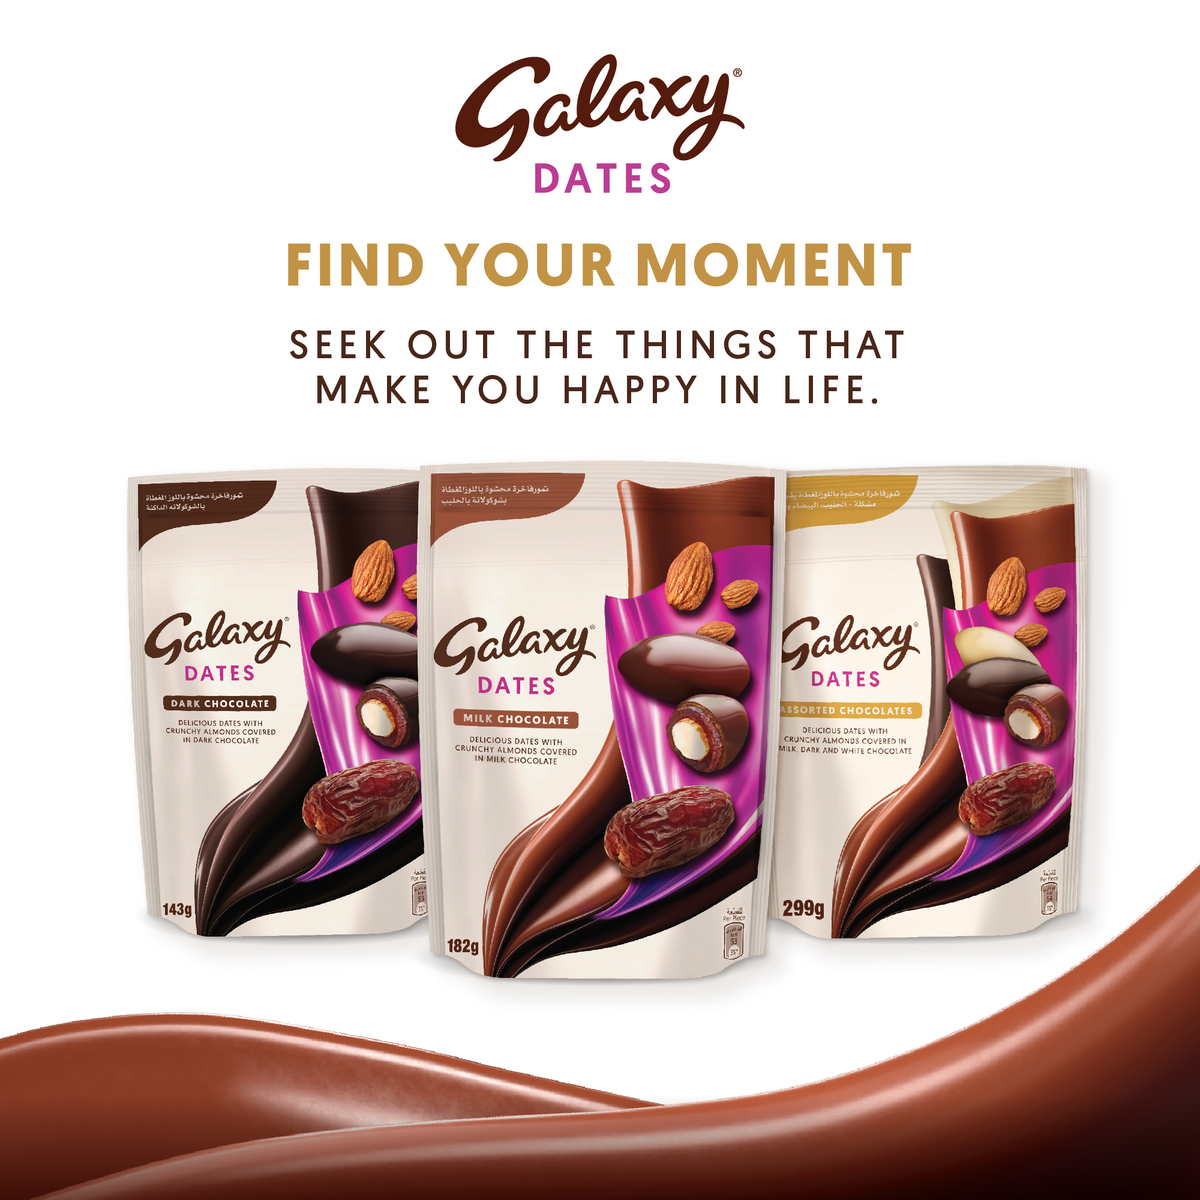 Galaxy Dates Assorted Chocolate 299 g